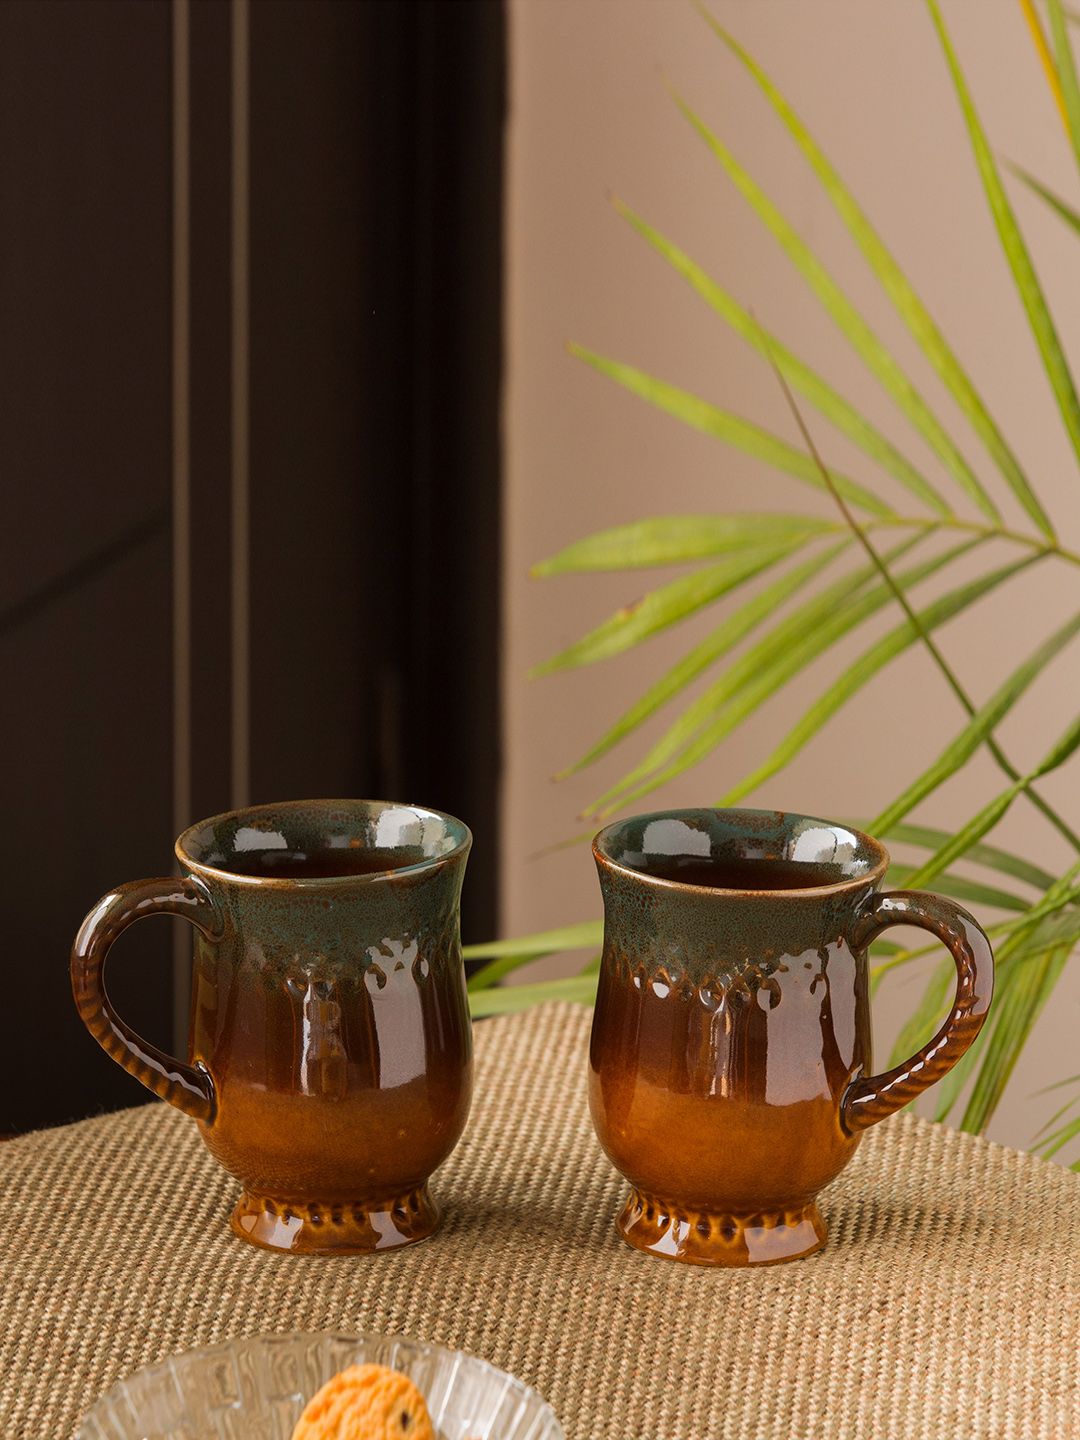 ExclusiveLane 'Amber & Teal' Studio Pottery Tea & Coffee Mugs In Ceramic (Set Of 2) Price in India